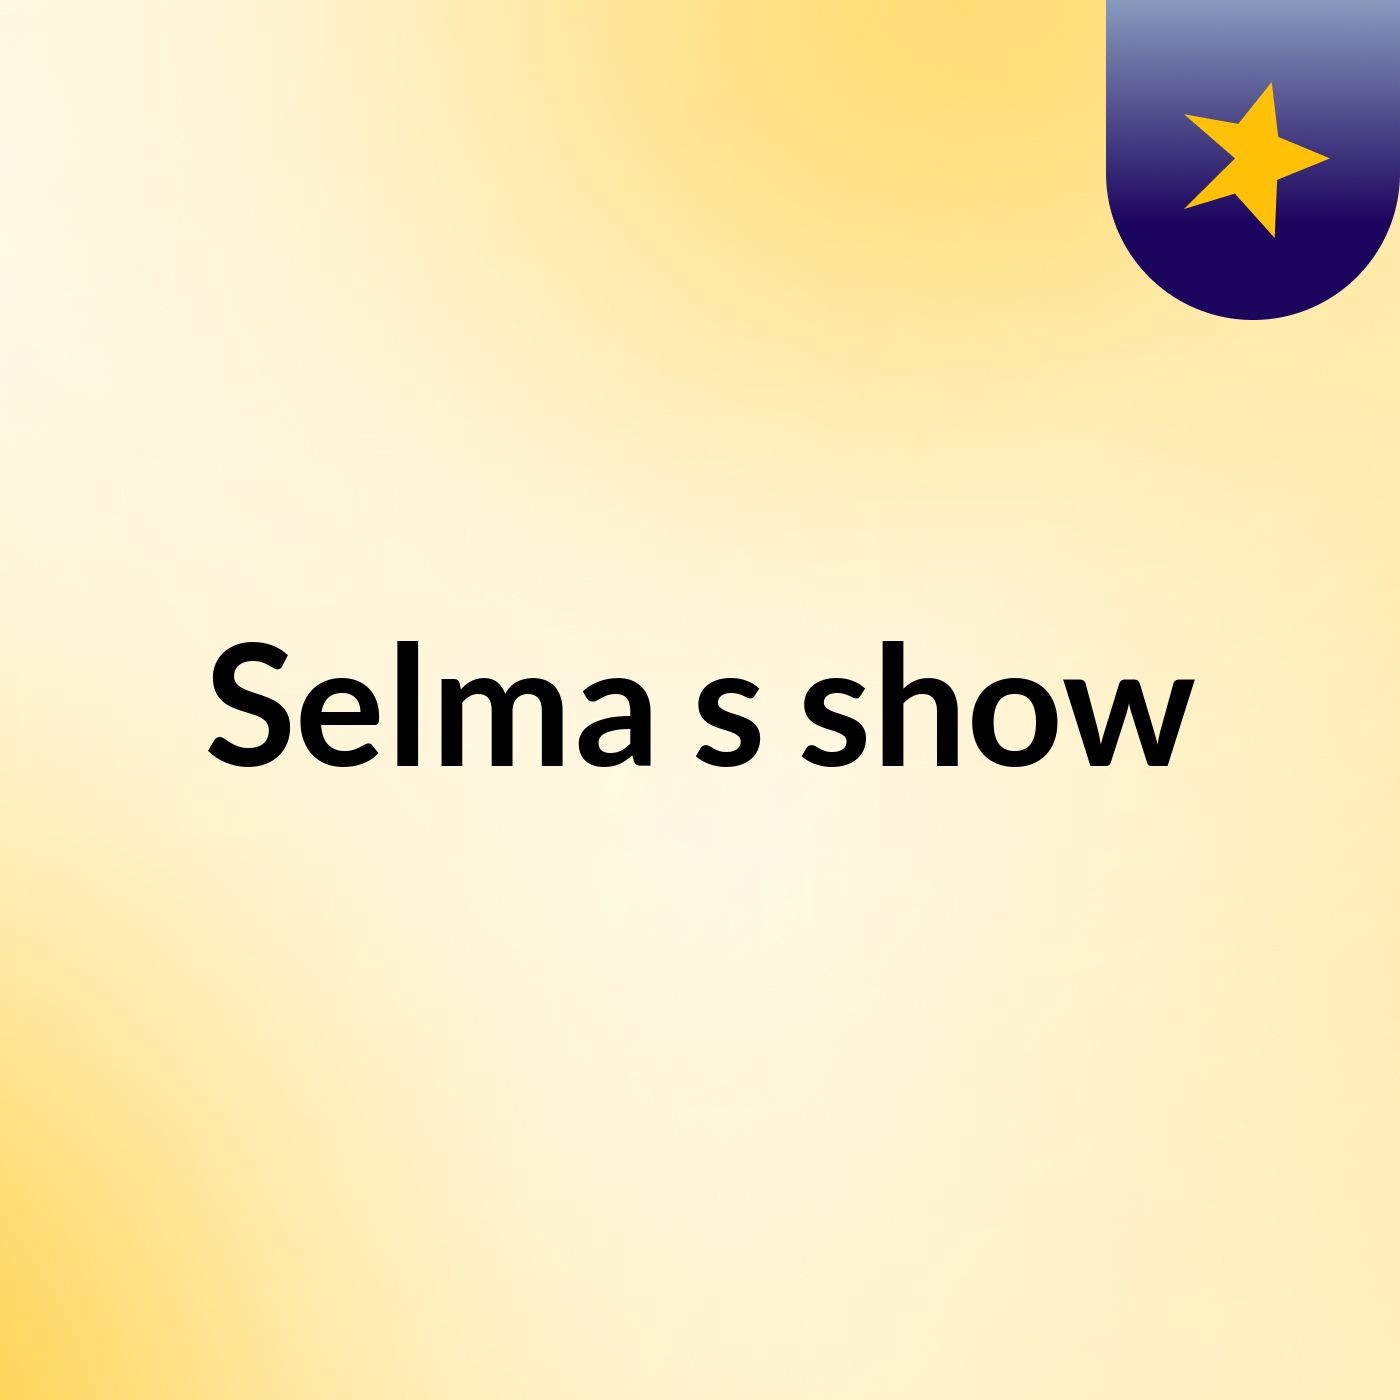 Selma's show